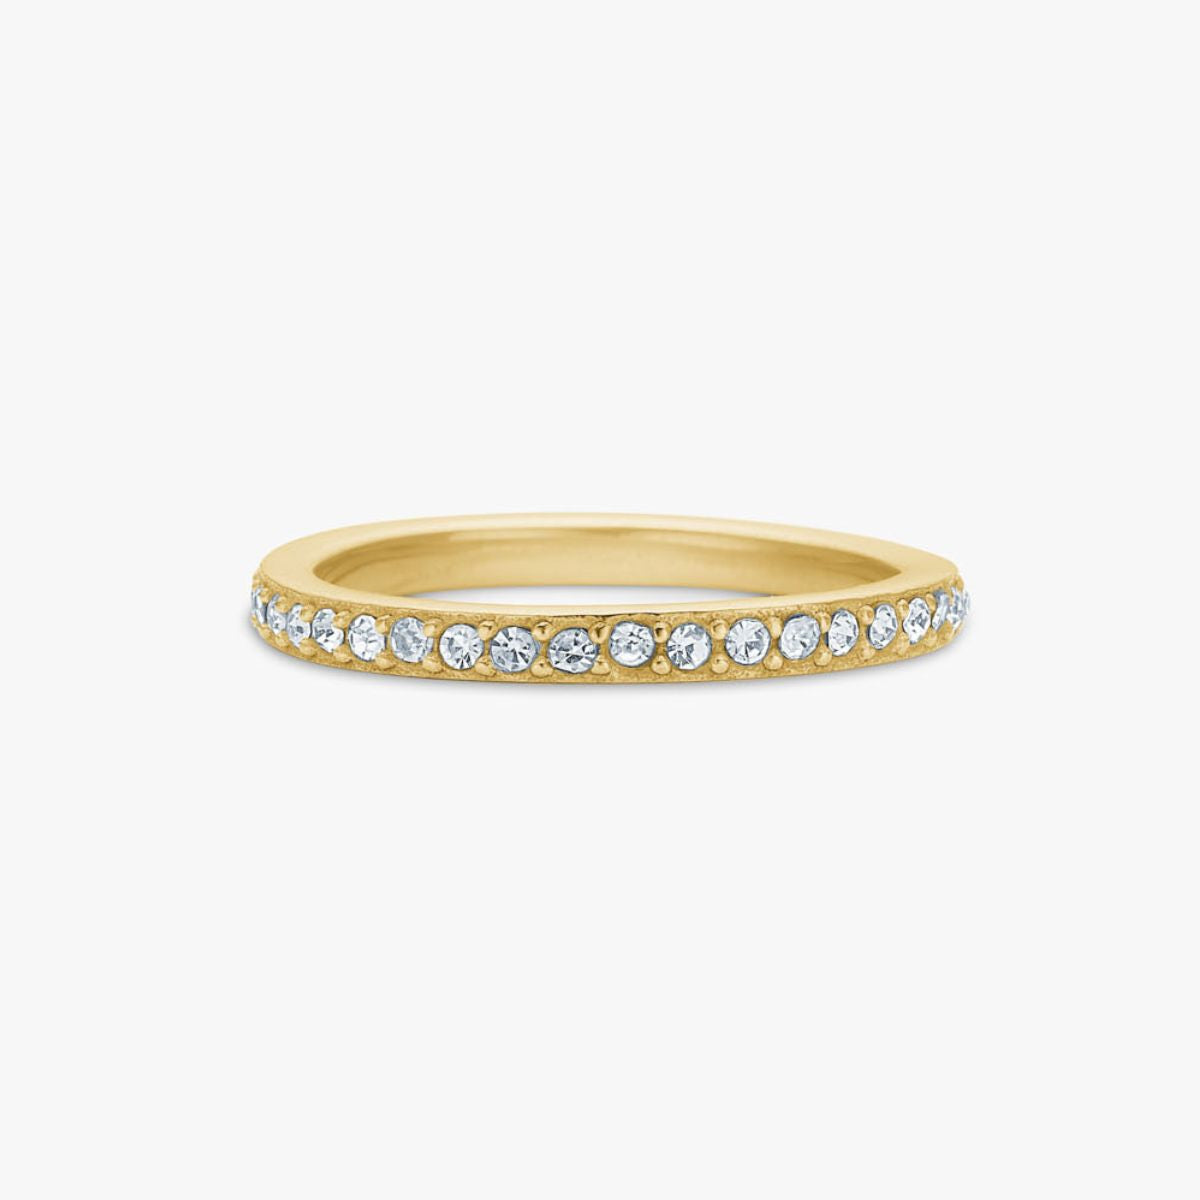 Camilla Krøyer Jewellery Krystal Band Ring 18K guldbelagt 2mm 